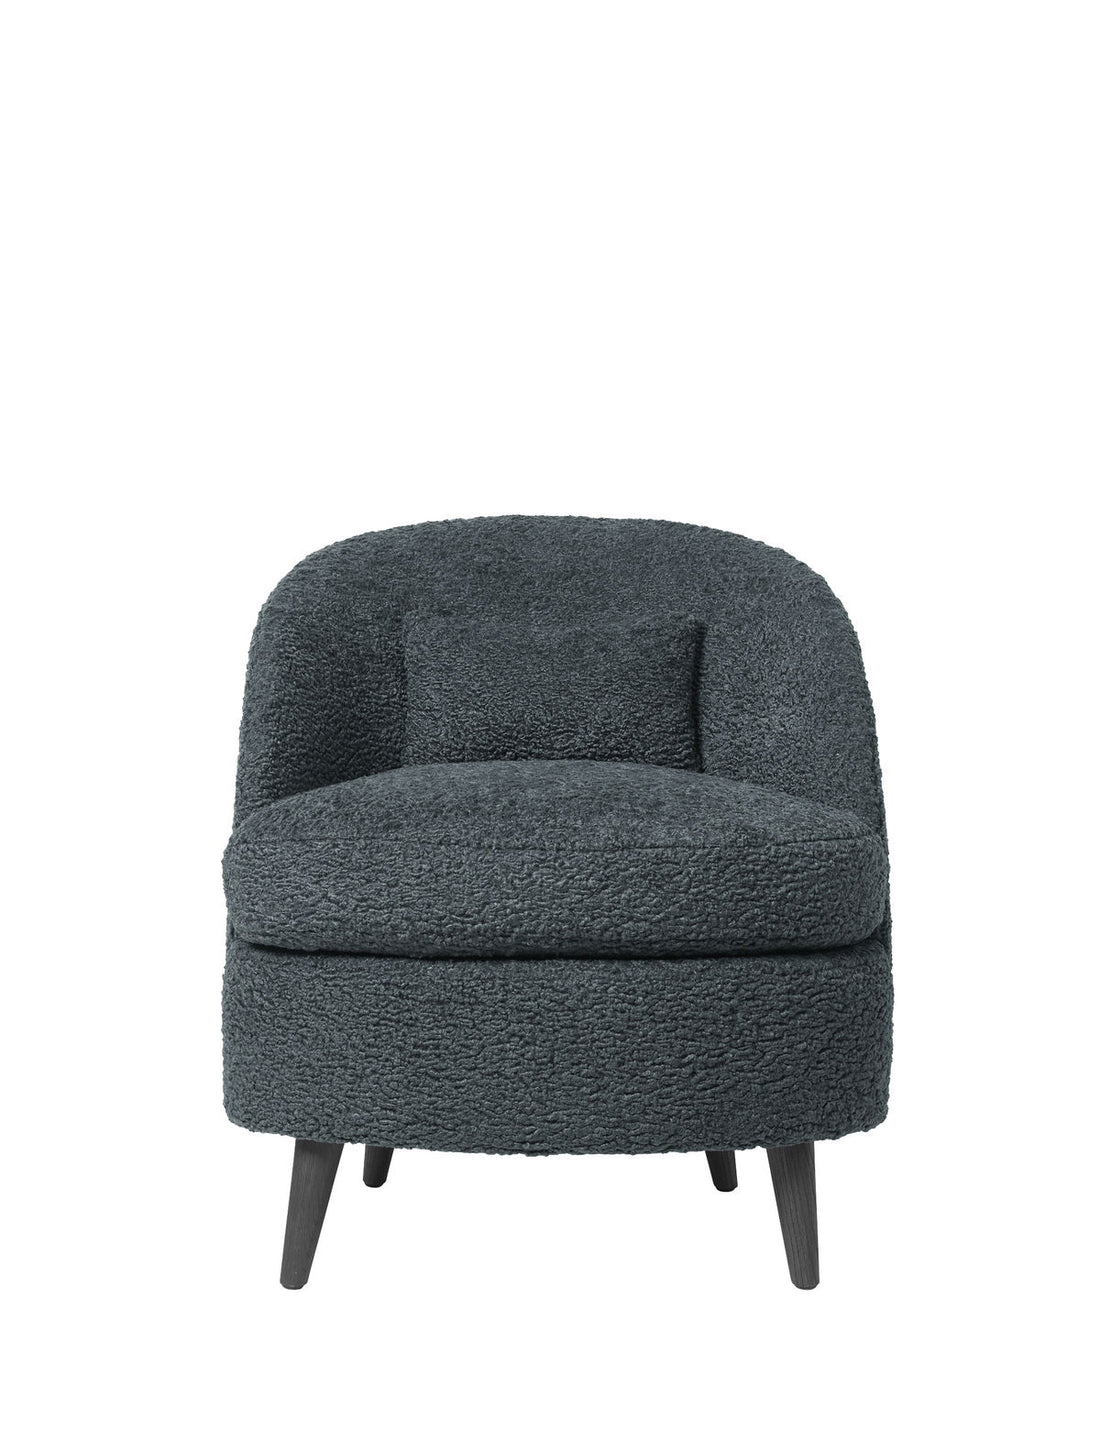 Gemütlicher Living Andrea Lounge Chair - Holzkohle (FR)